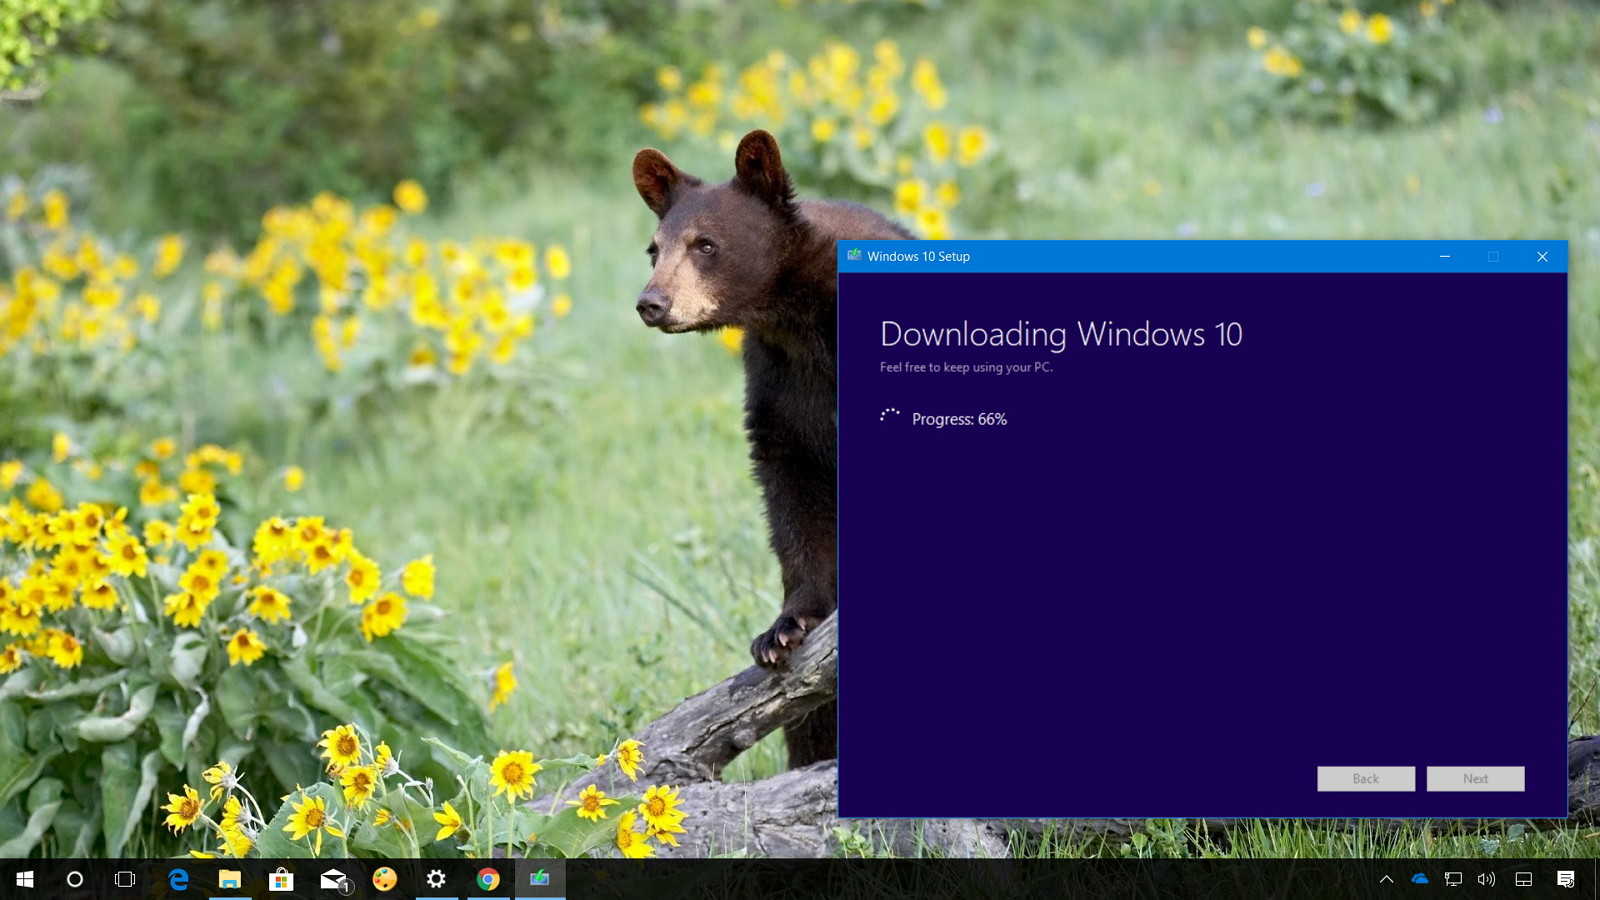 Windows 10 version 1803 upgrade process using Media Creation Tool